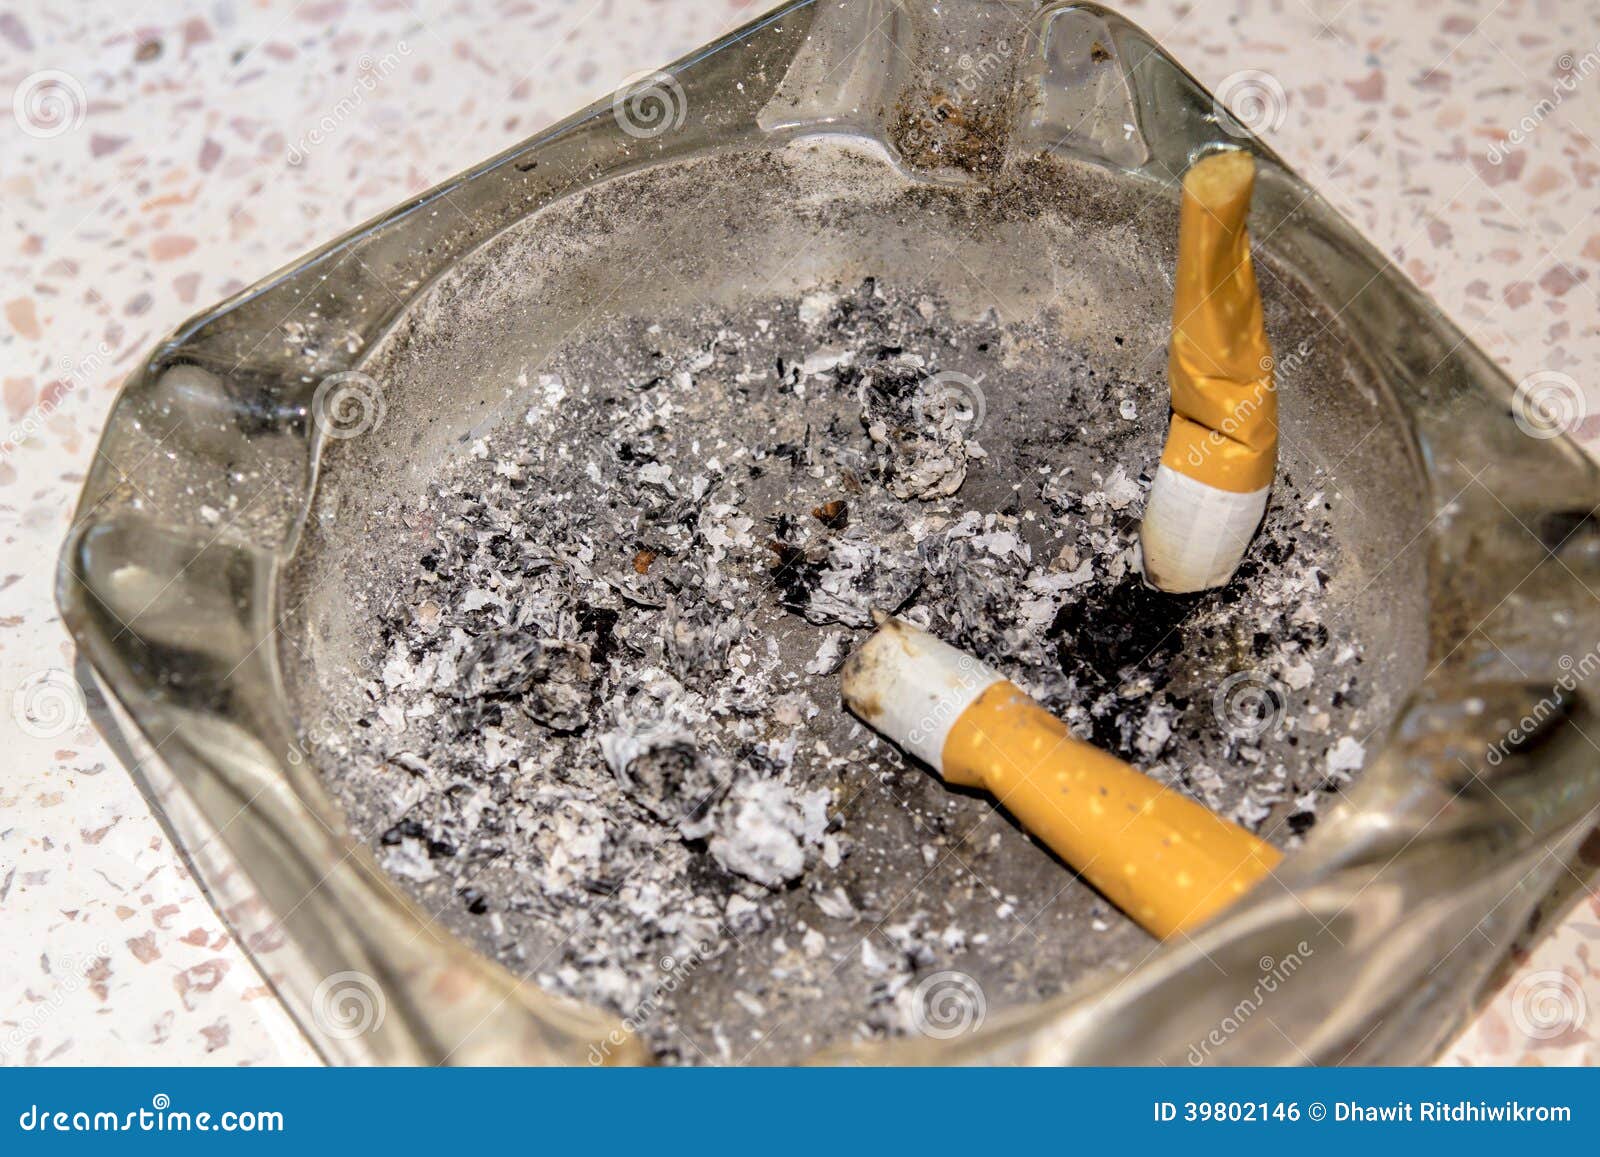 Grayscale photo of cigarette stick on ashtray photo – Free Ashtray